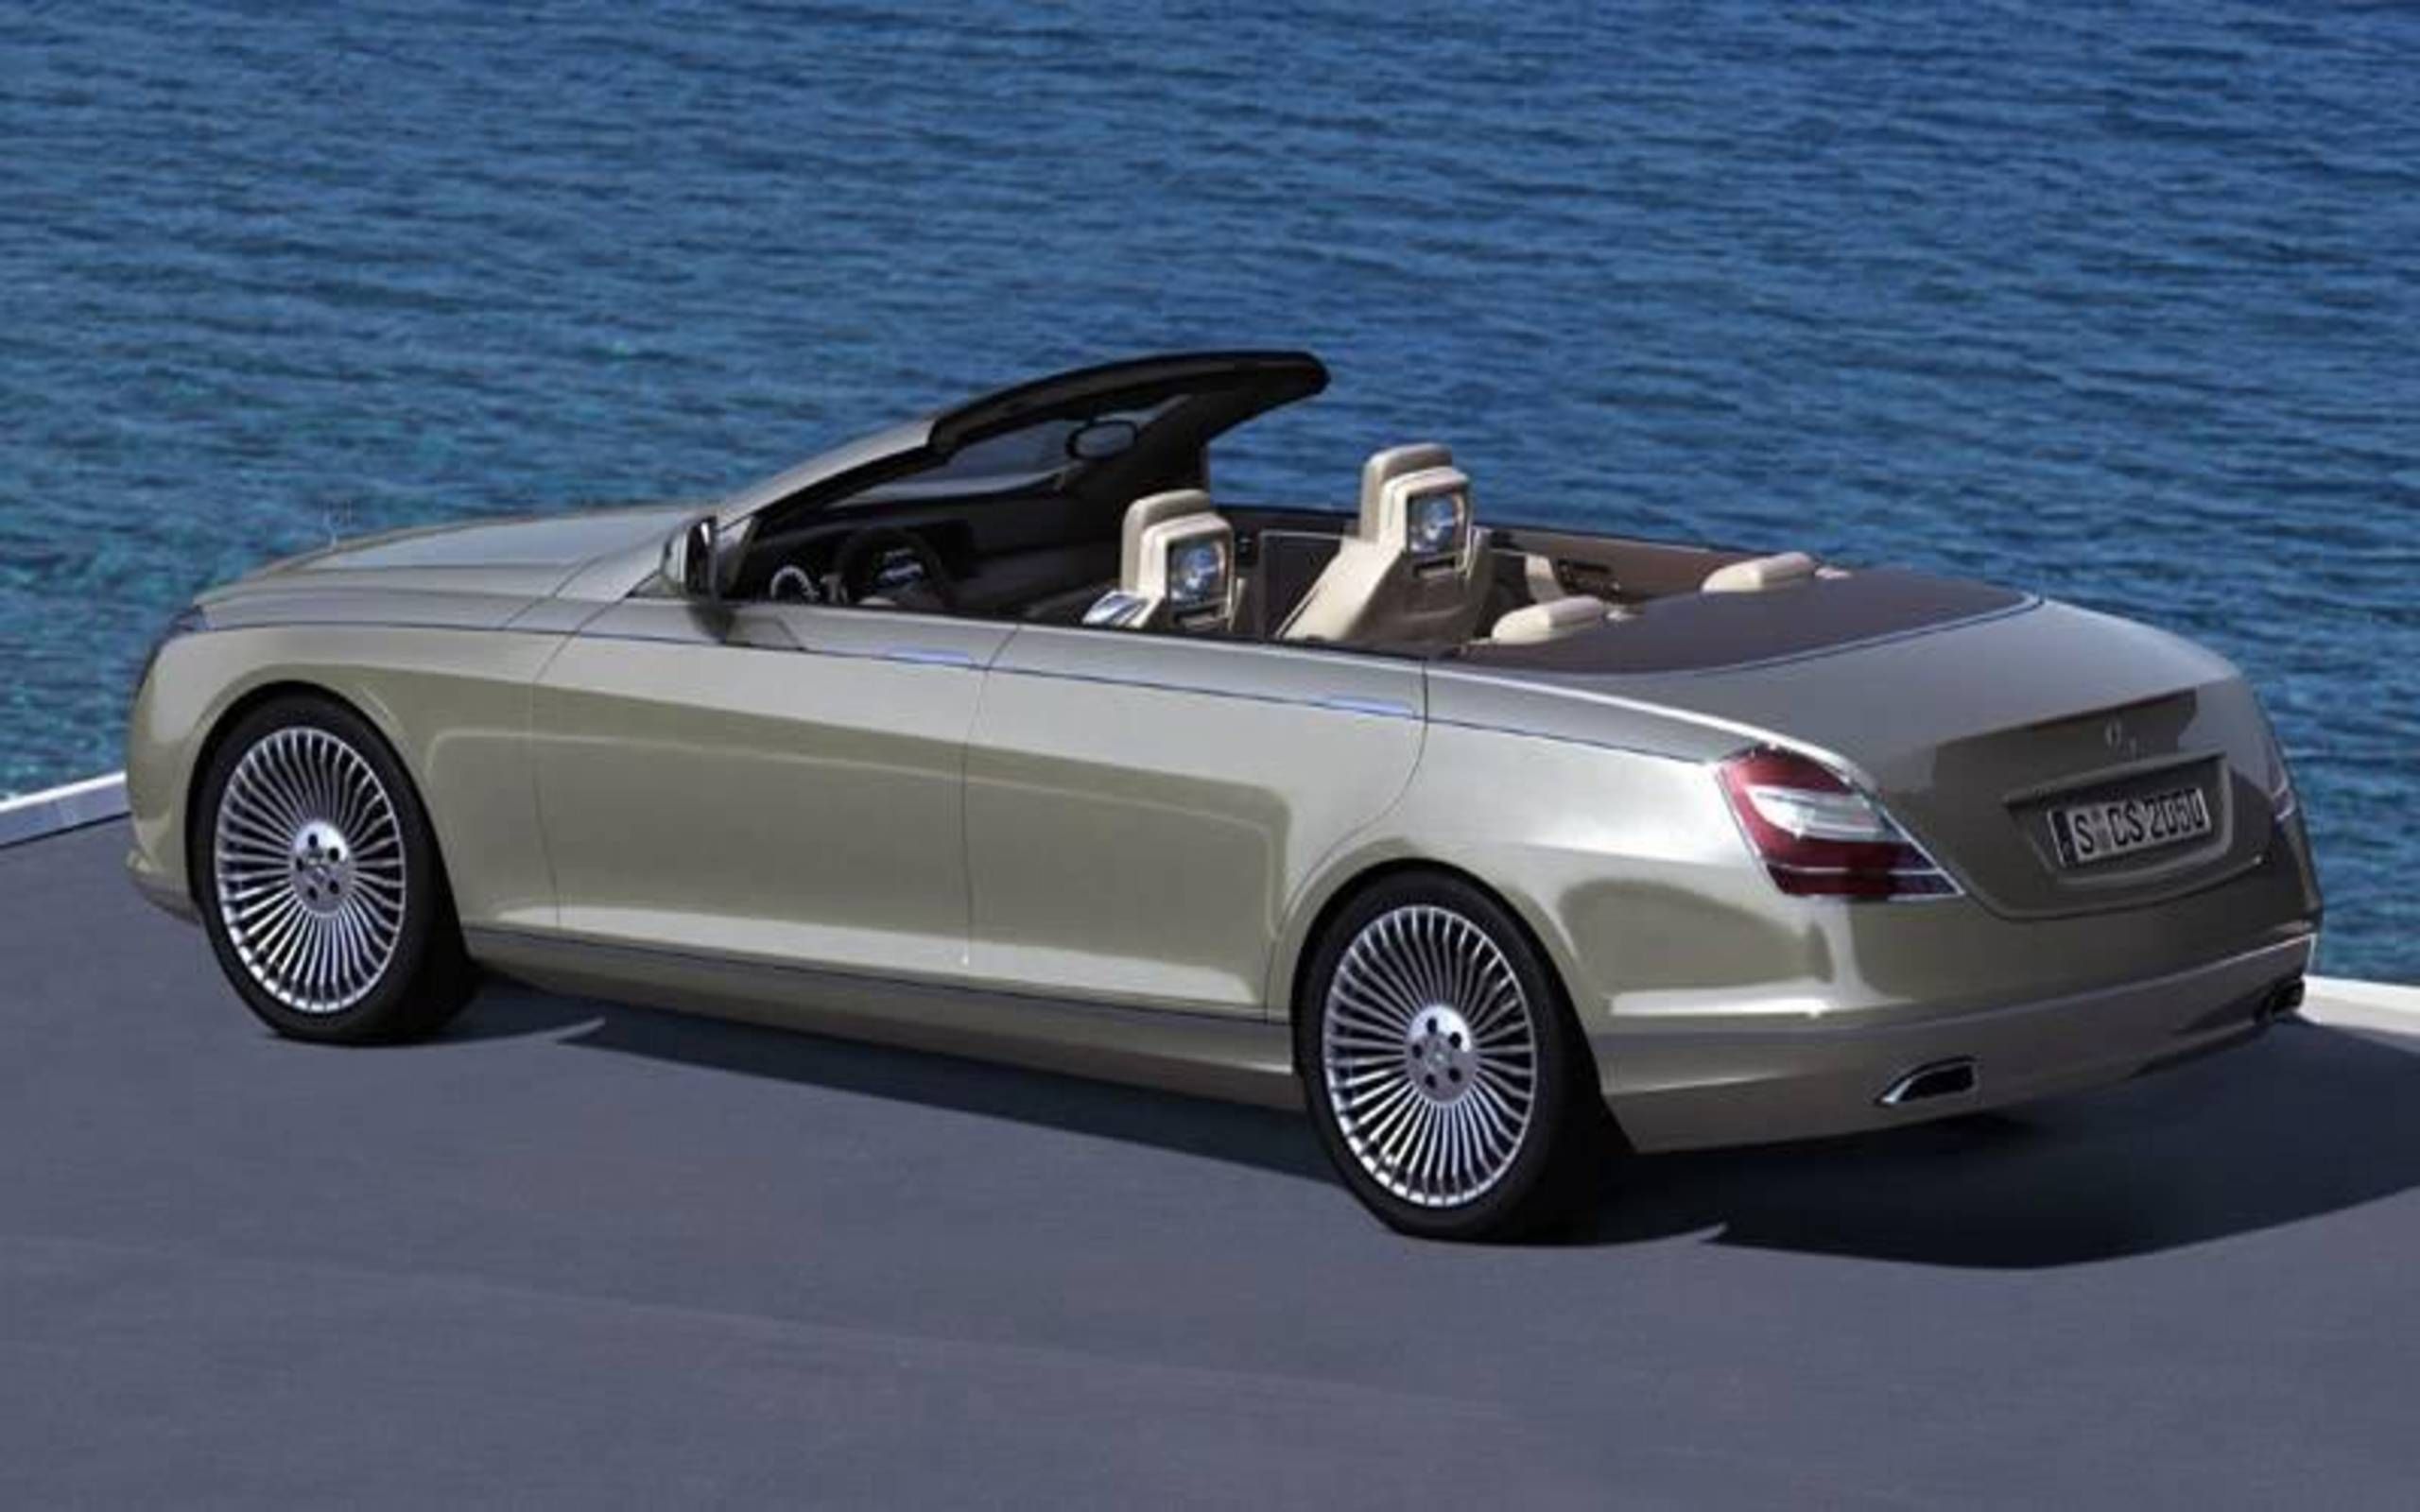 Mercedes-Benz Ocean Drive: Stunning concept floated to gauge response